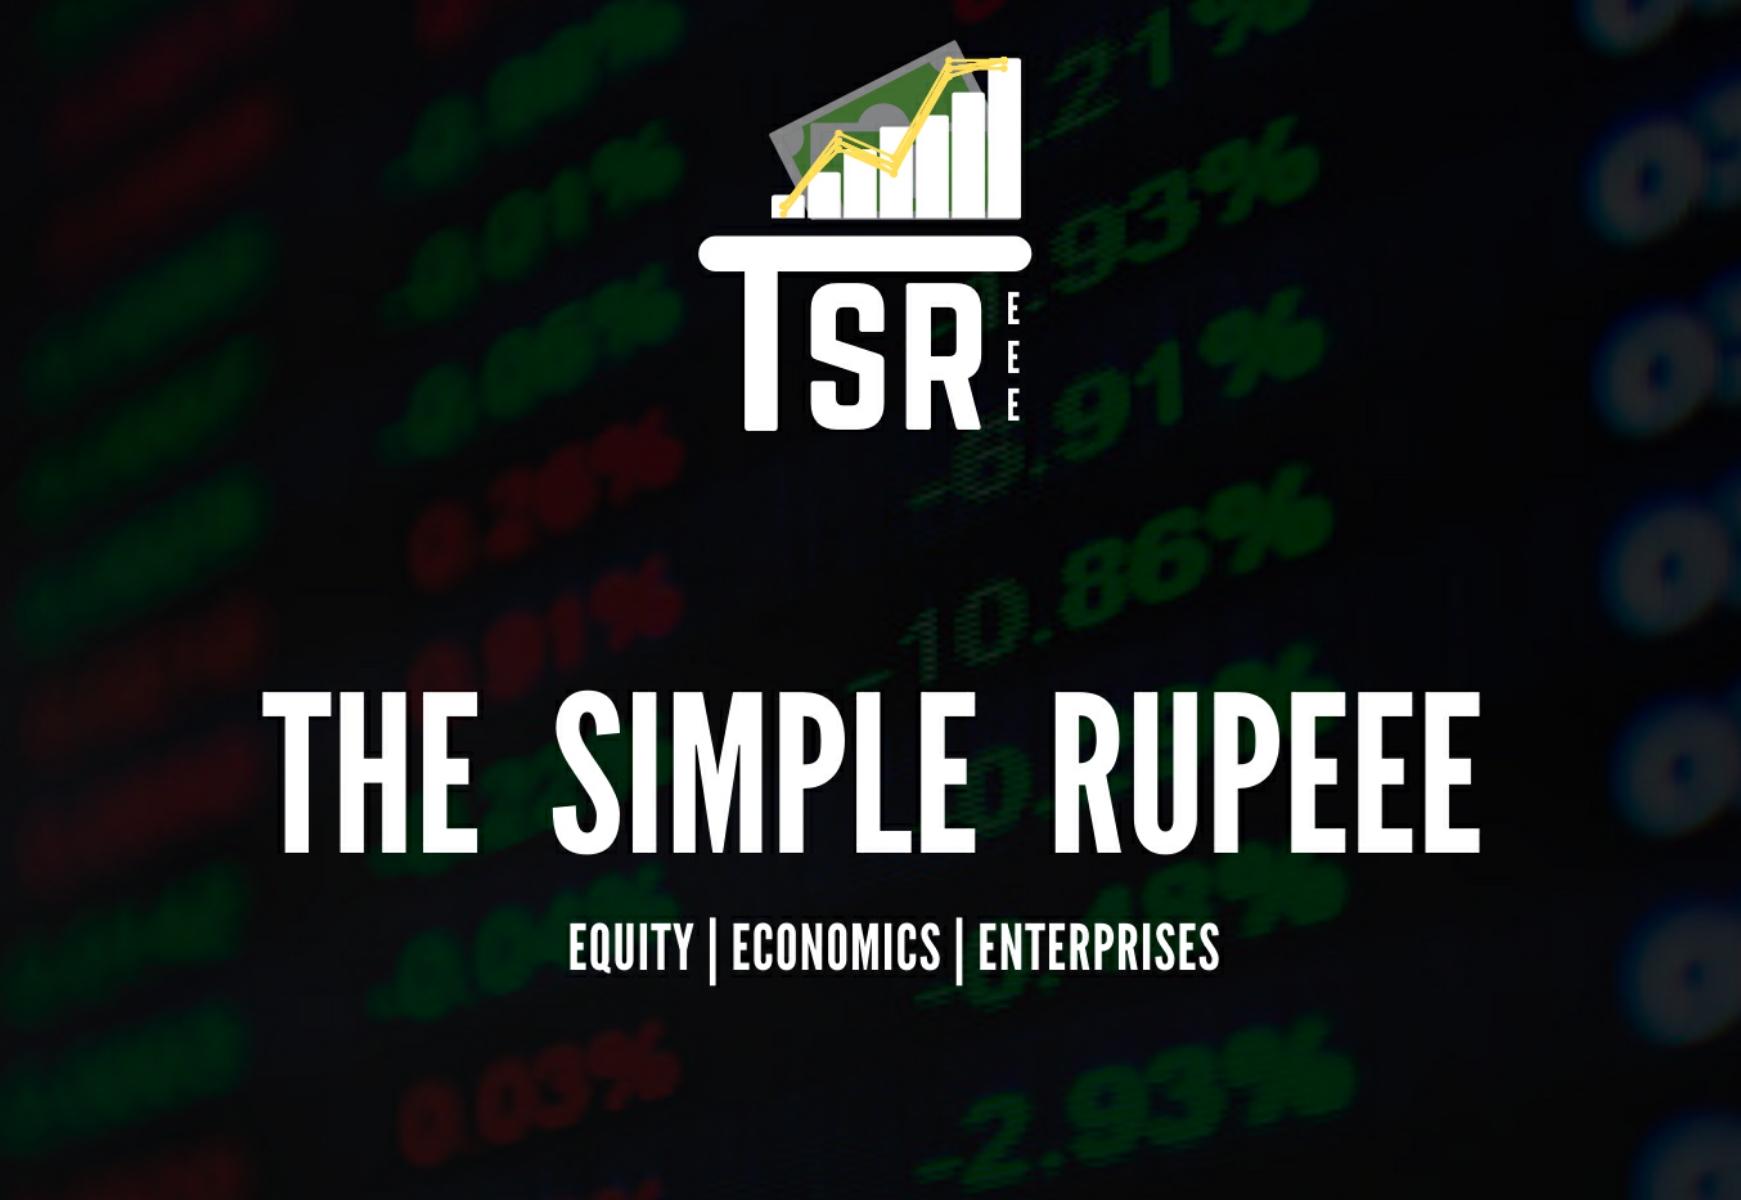 The Simple Rupeee (TSR)